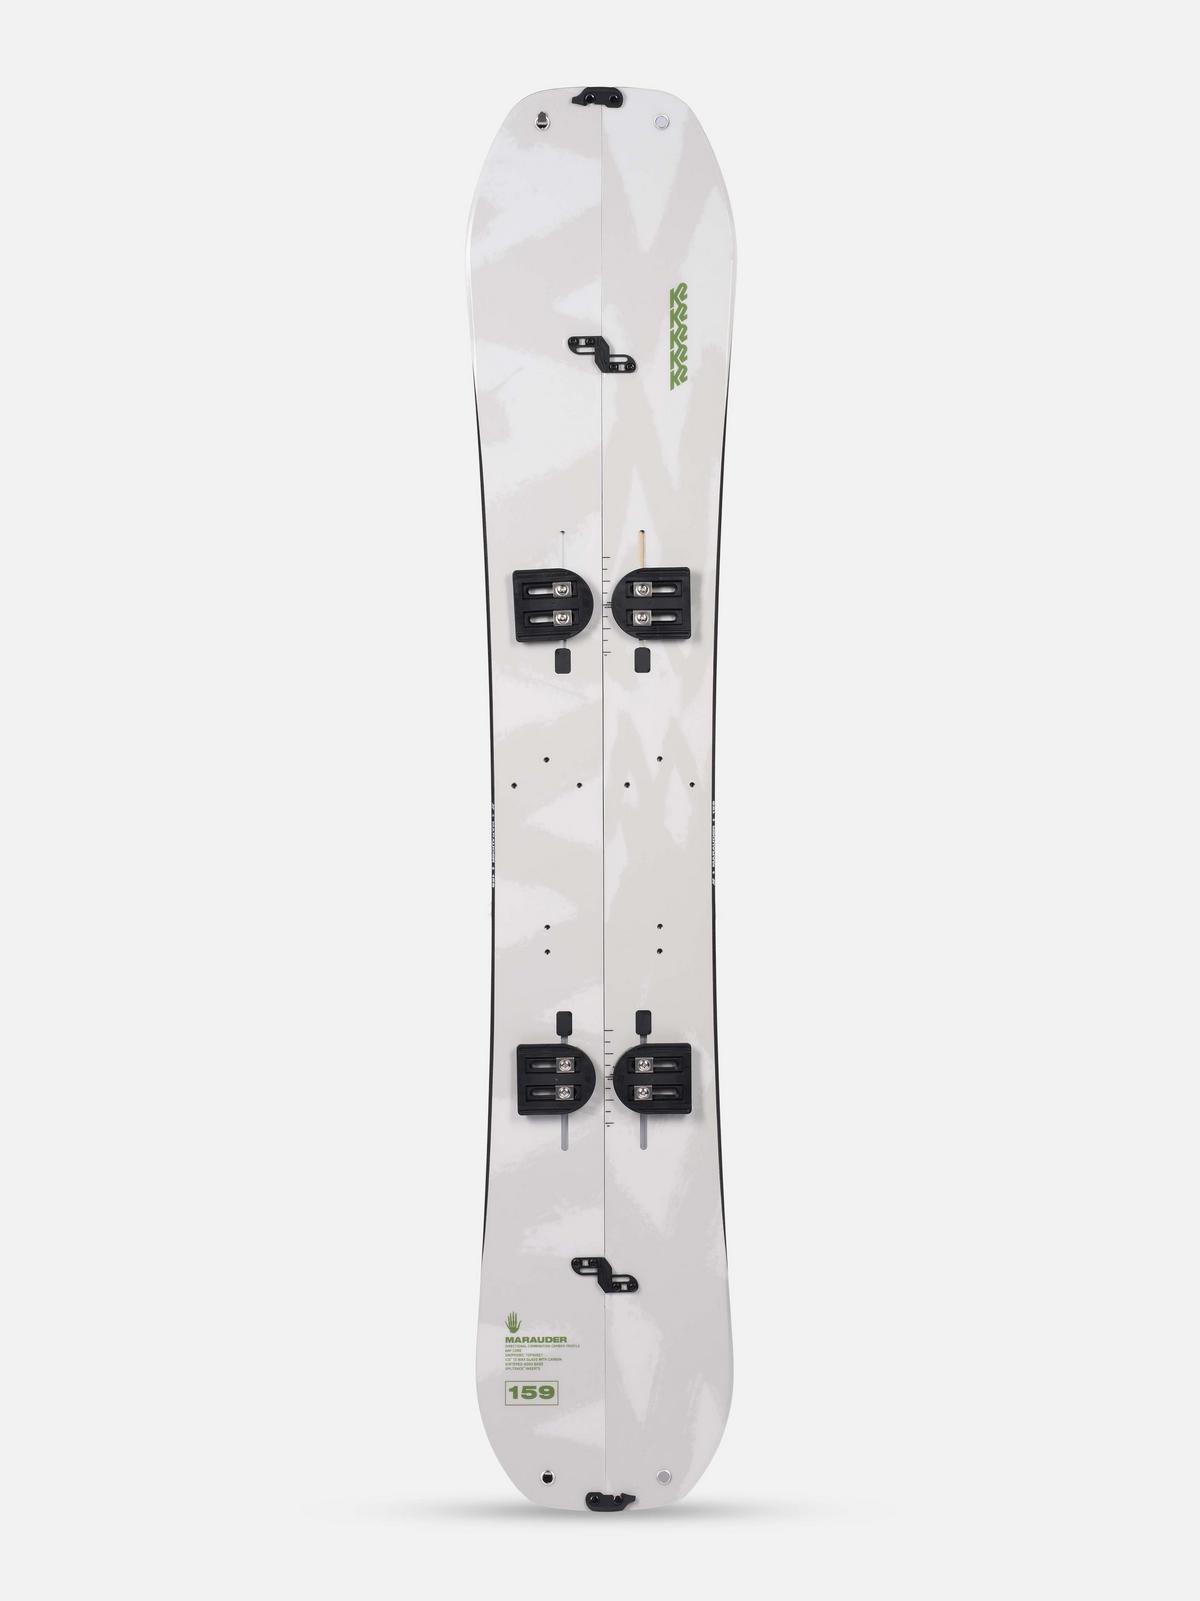 Marauder Split Package | K2 Skis and K2 Snowboarding